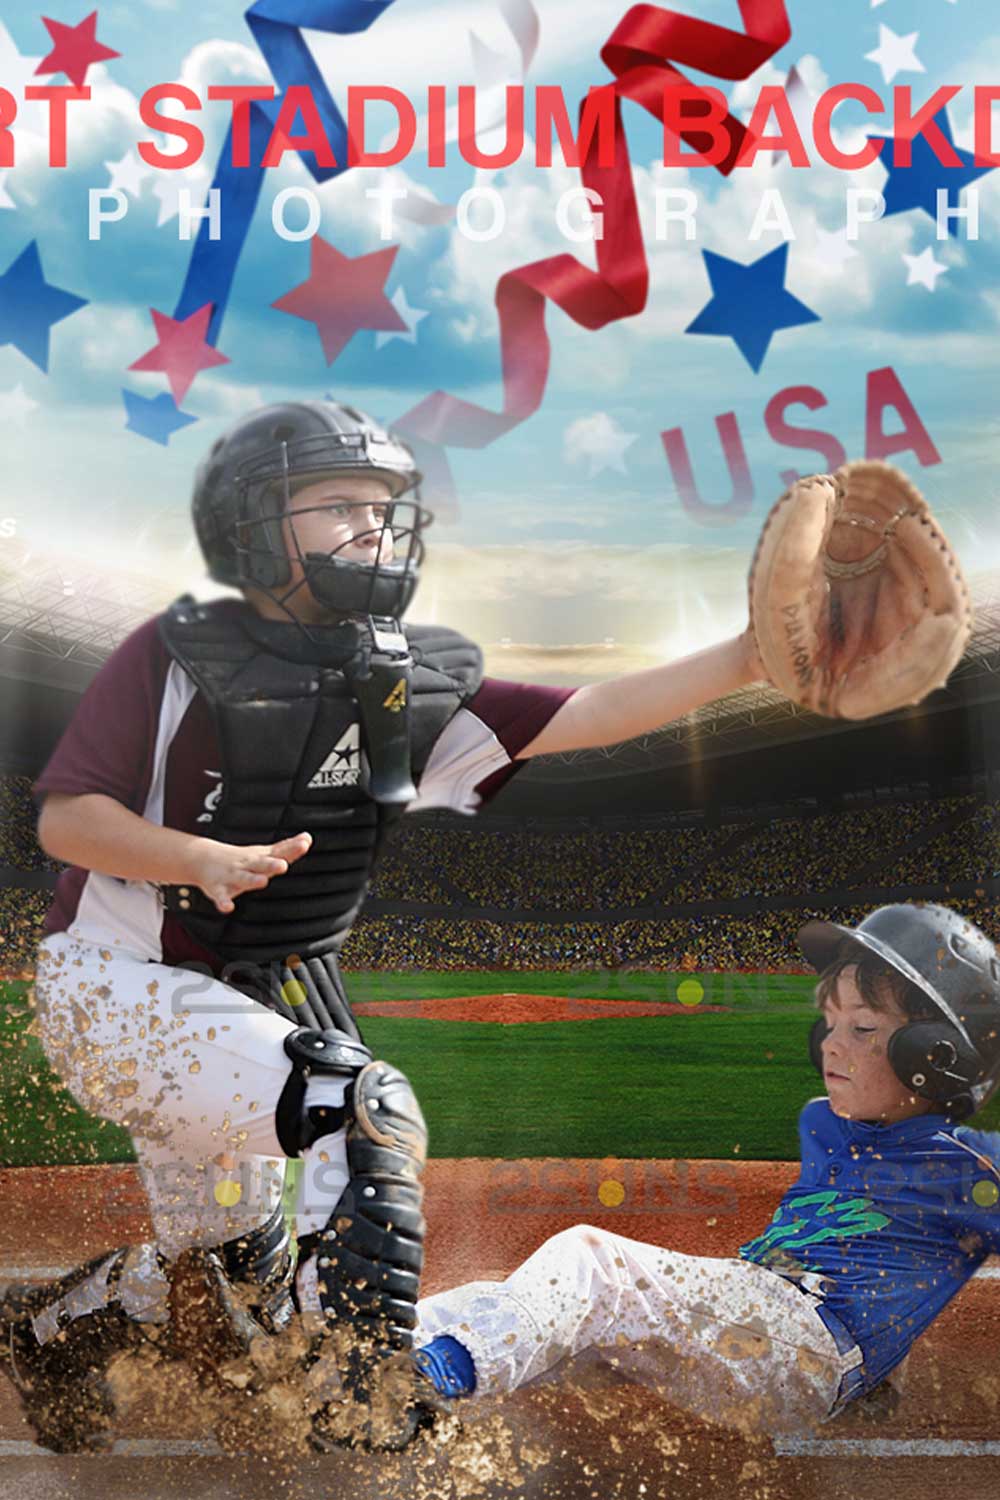 Baseball Modern And Stylish Backdrop Sports Digital Background Overlay Pinterest Image.